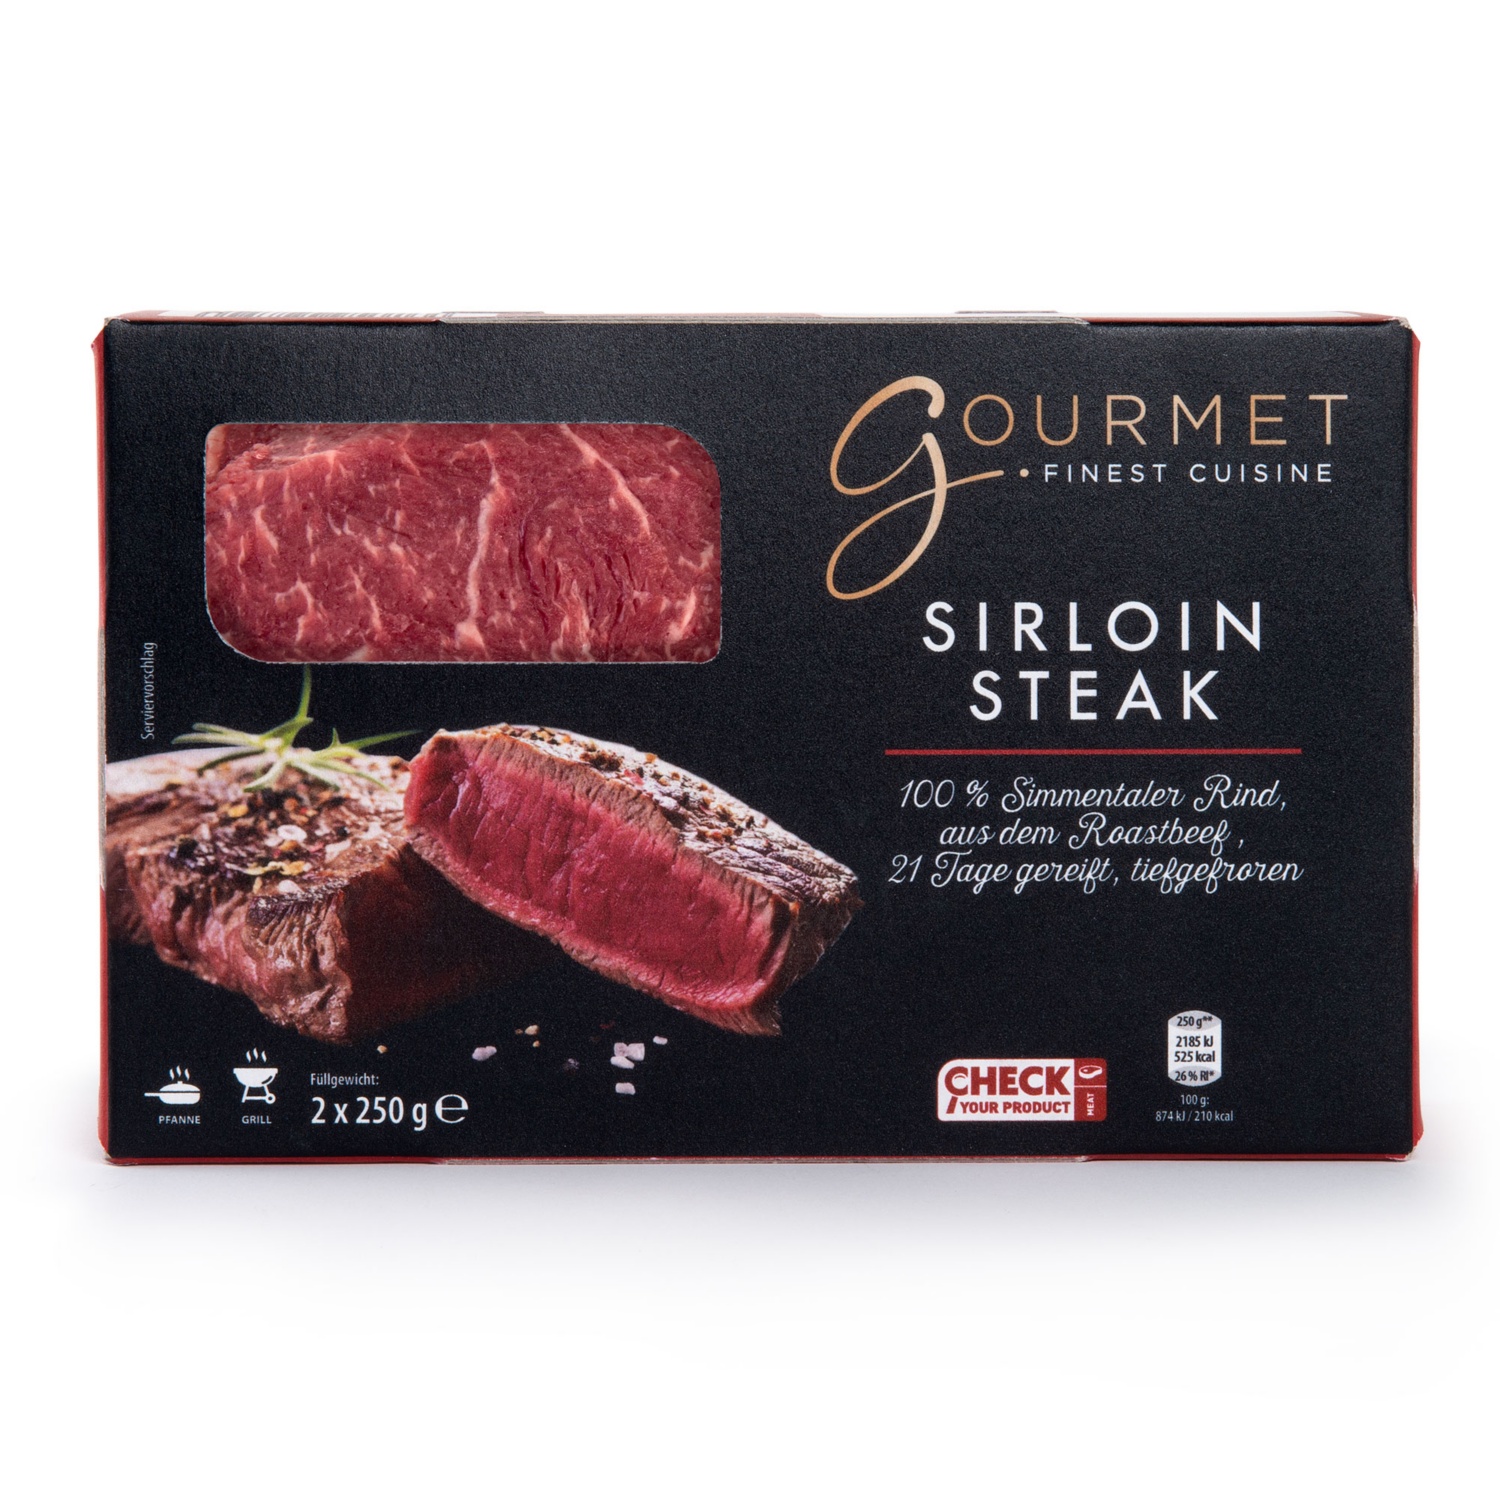 GOURMET FINEST CUISINE Rindersteaks, Sirloin Steak